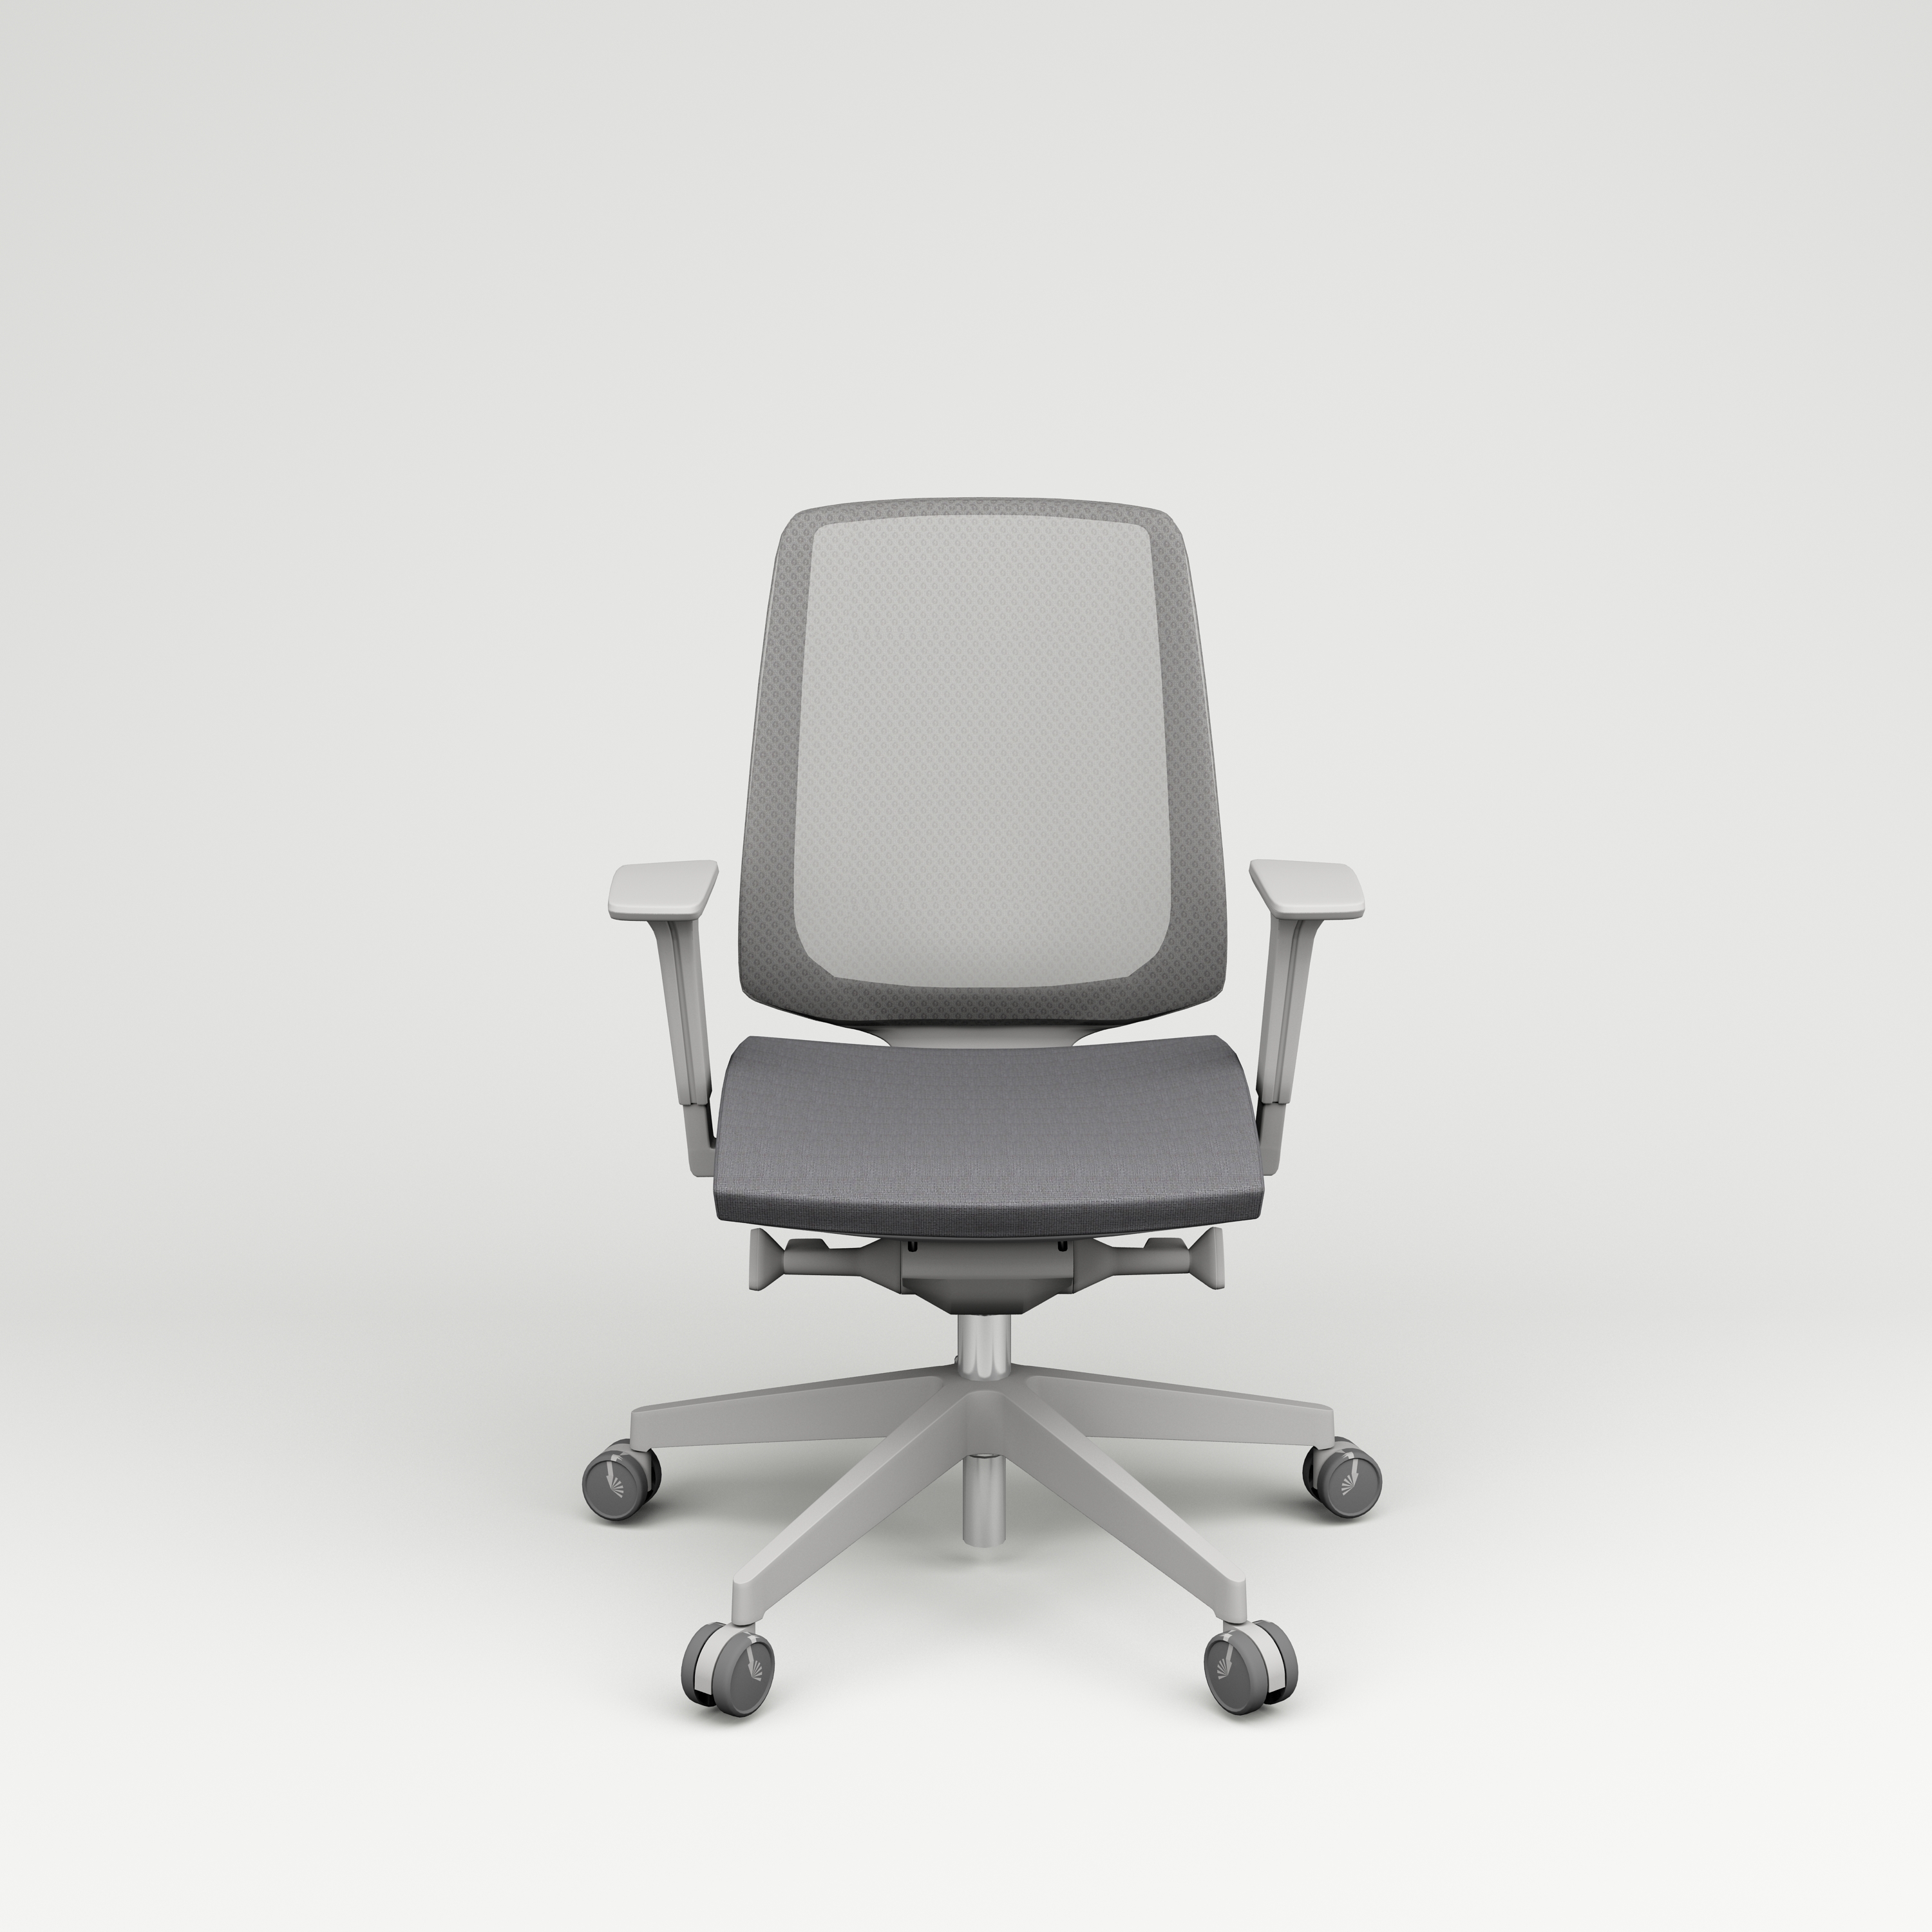 Office chair Light Up, gray mesh back, armrests